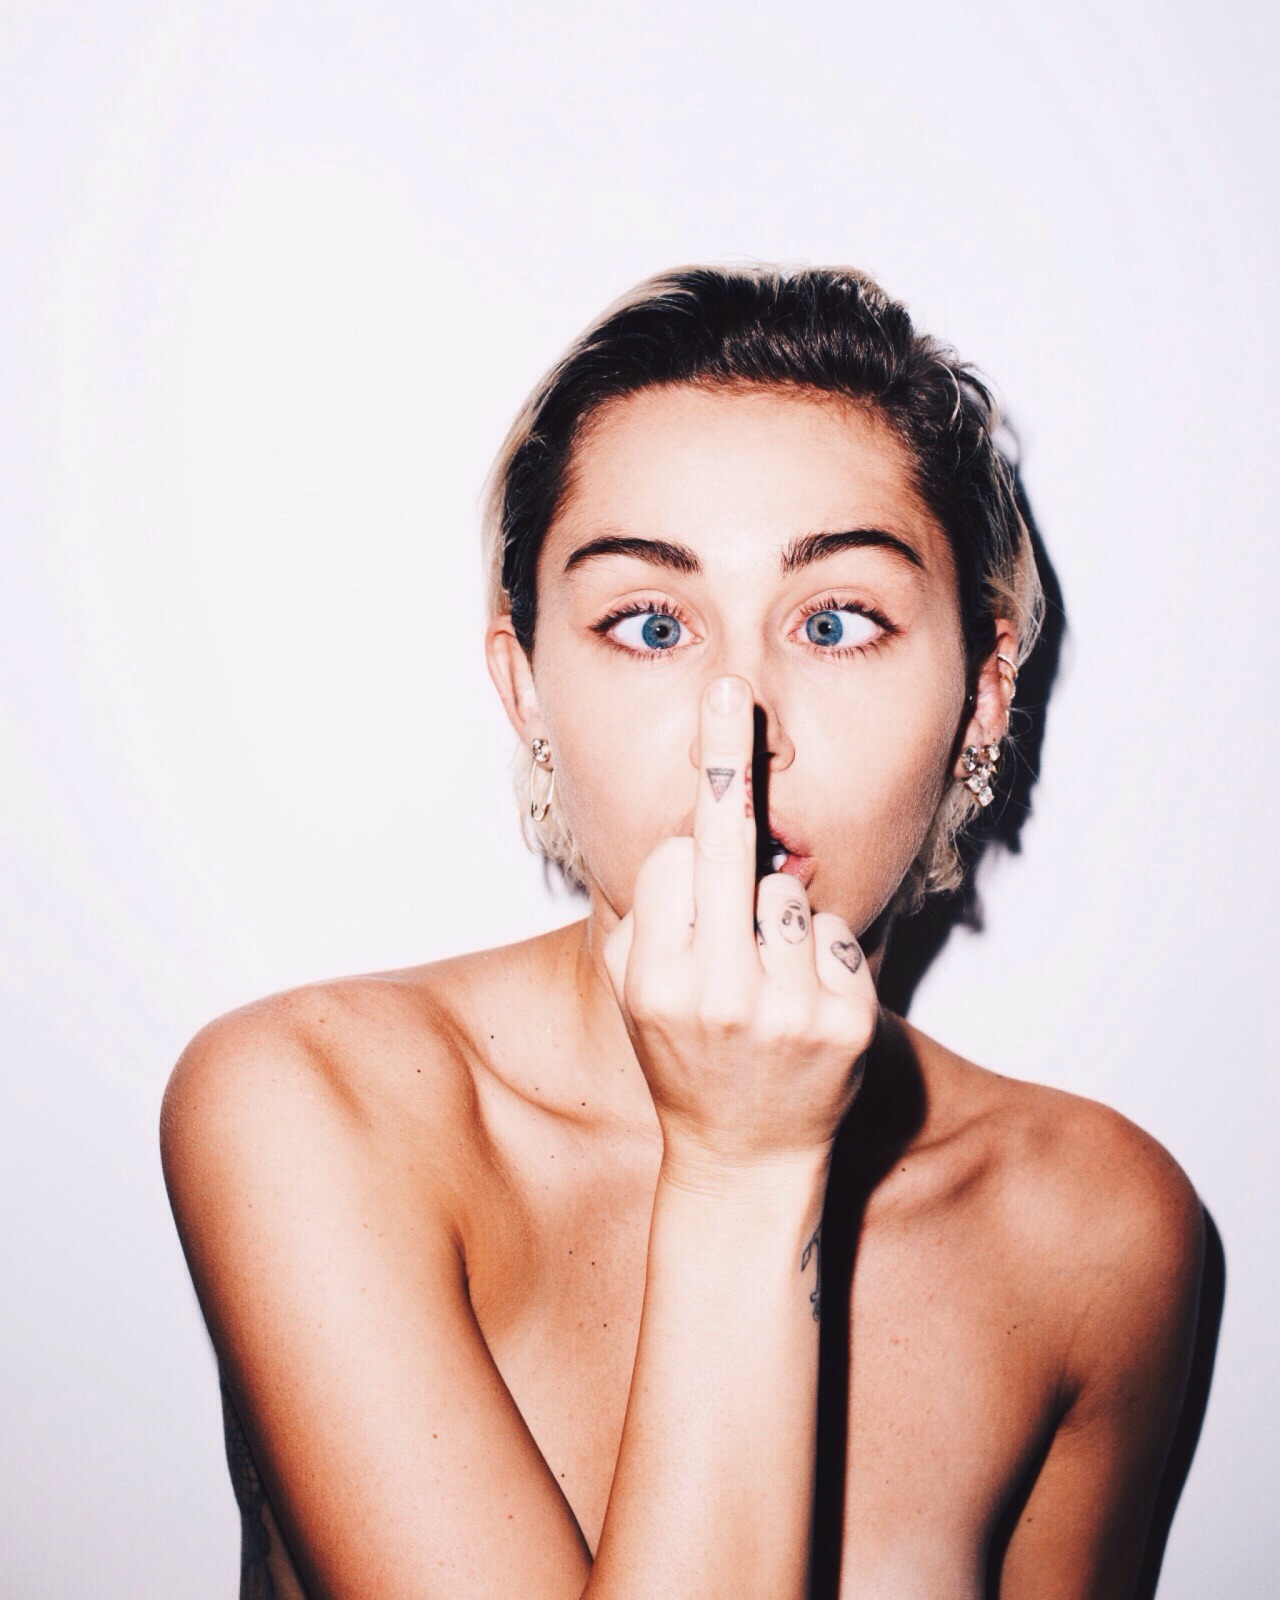 Miley cyrus terry richardson shoot